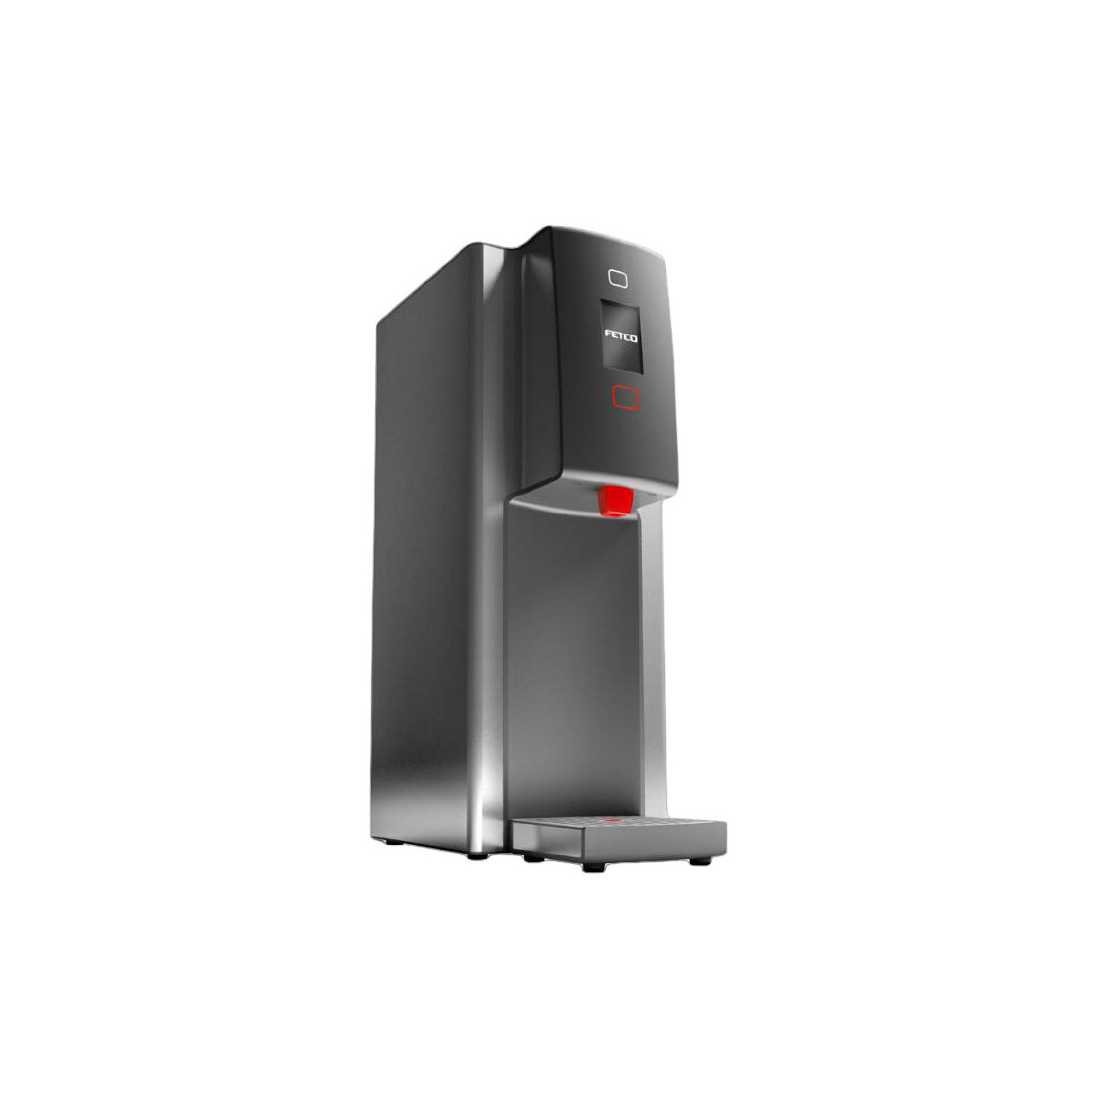 FETCO (HWD-2105 TOD) Hot Water Dispenser|mkayn|مكاين